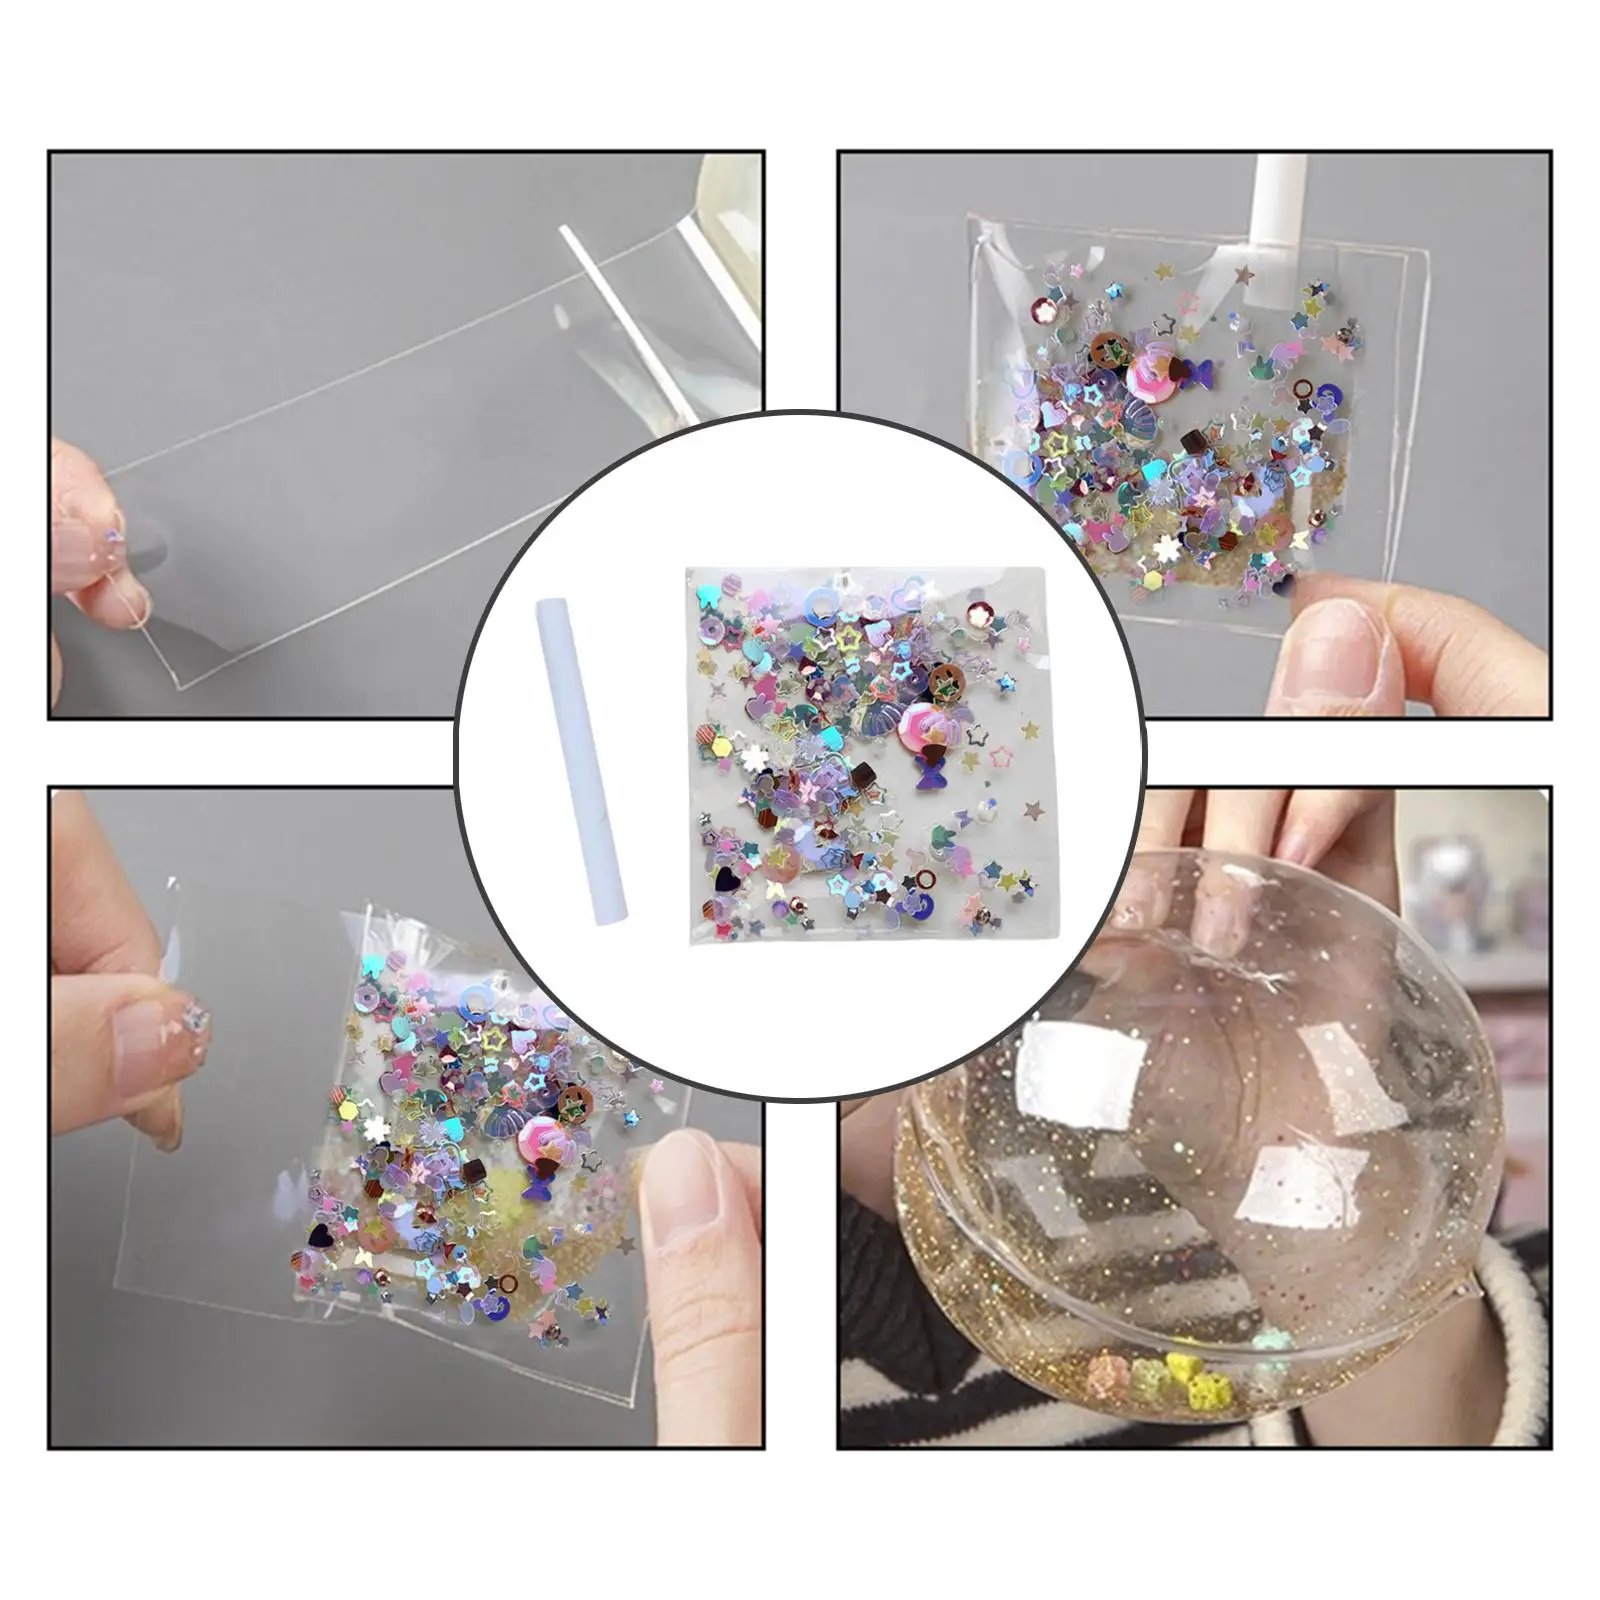 Multicolor Manicure Glitter Confetti Paillette for Halloween Party Decoration DIY Crafts